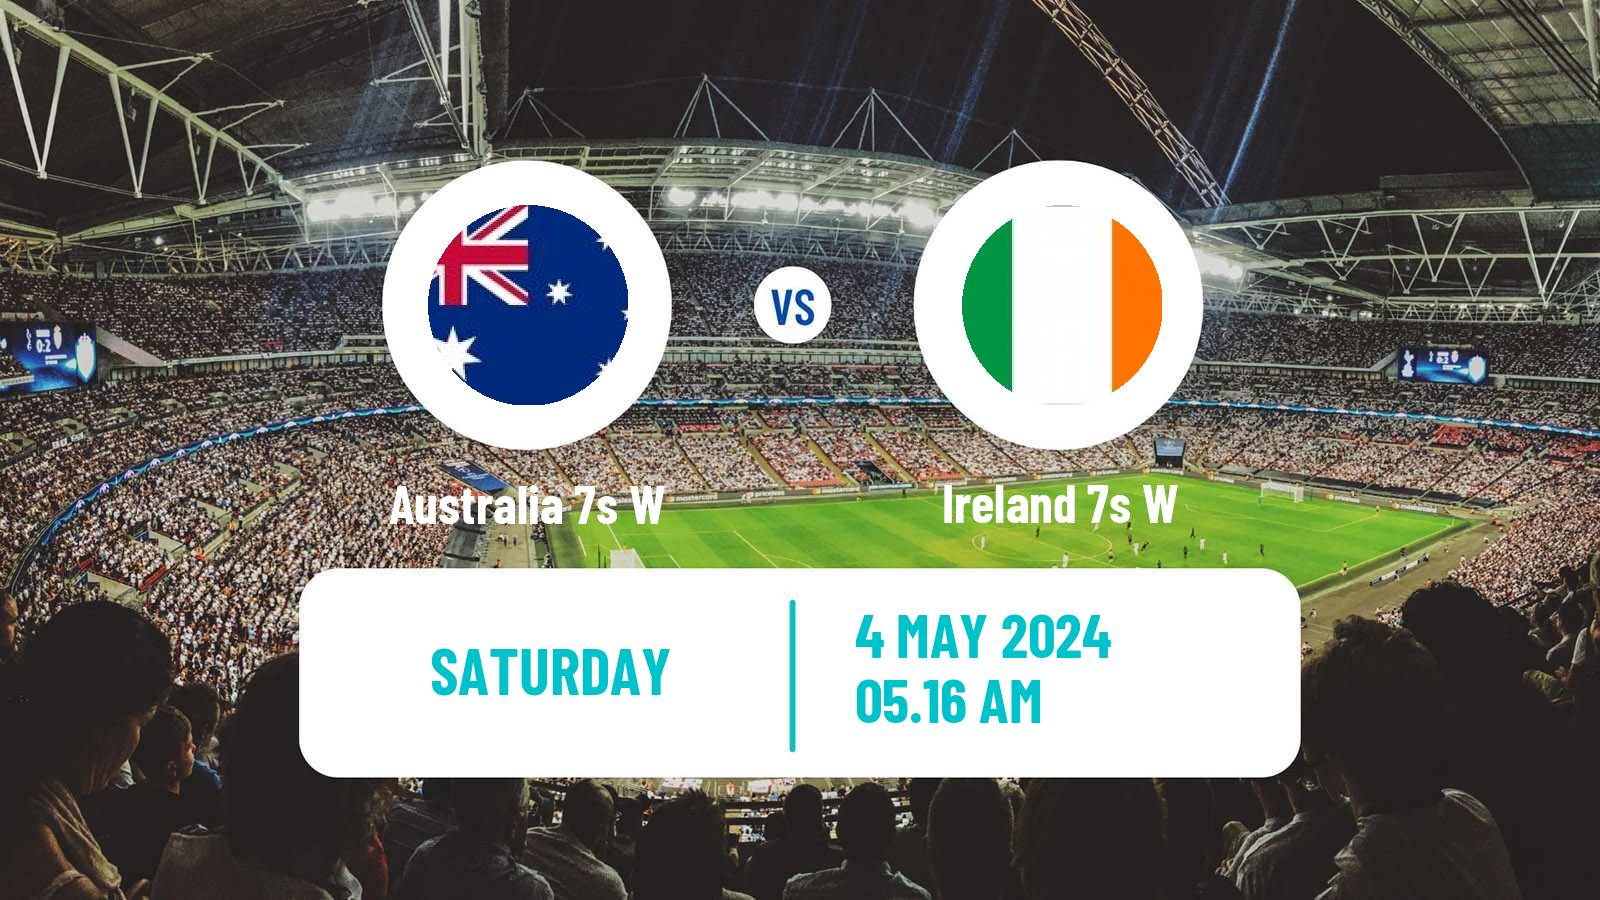 Soccer Sevens World Series Women - Singapore Australia 7s W - Ireland 7s W